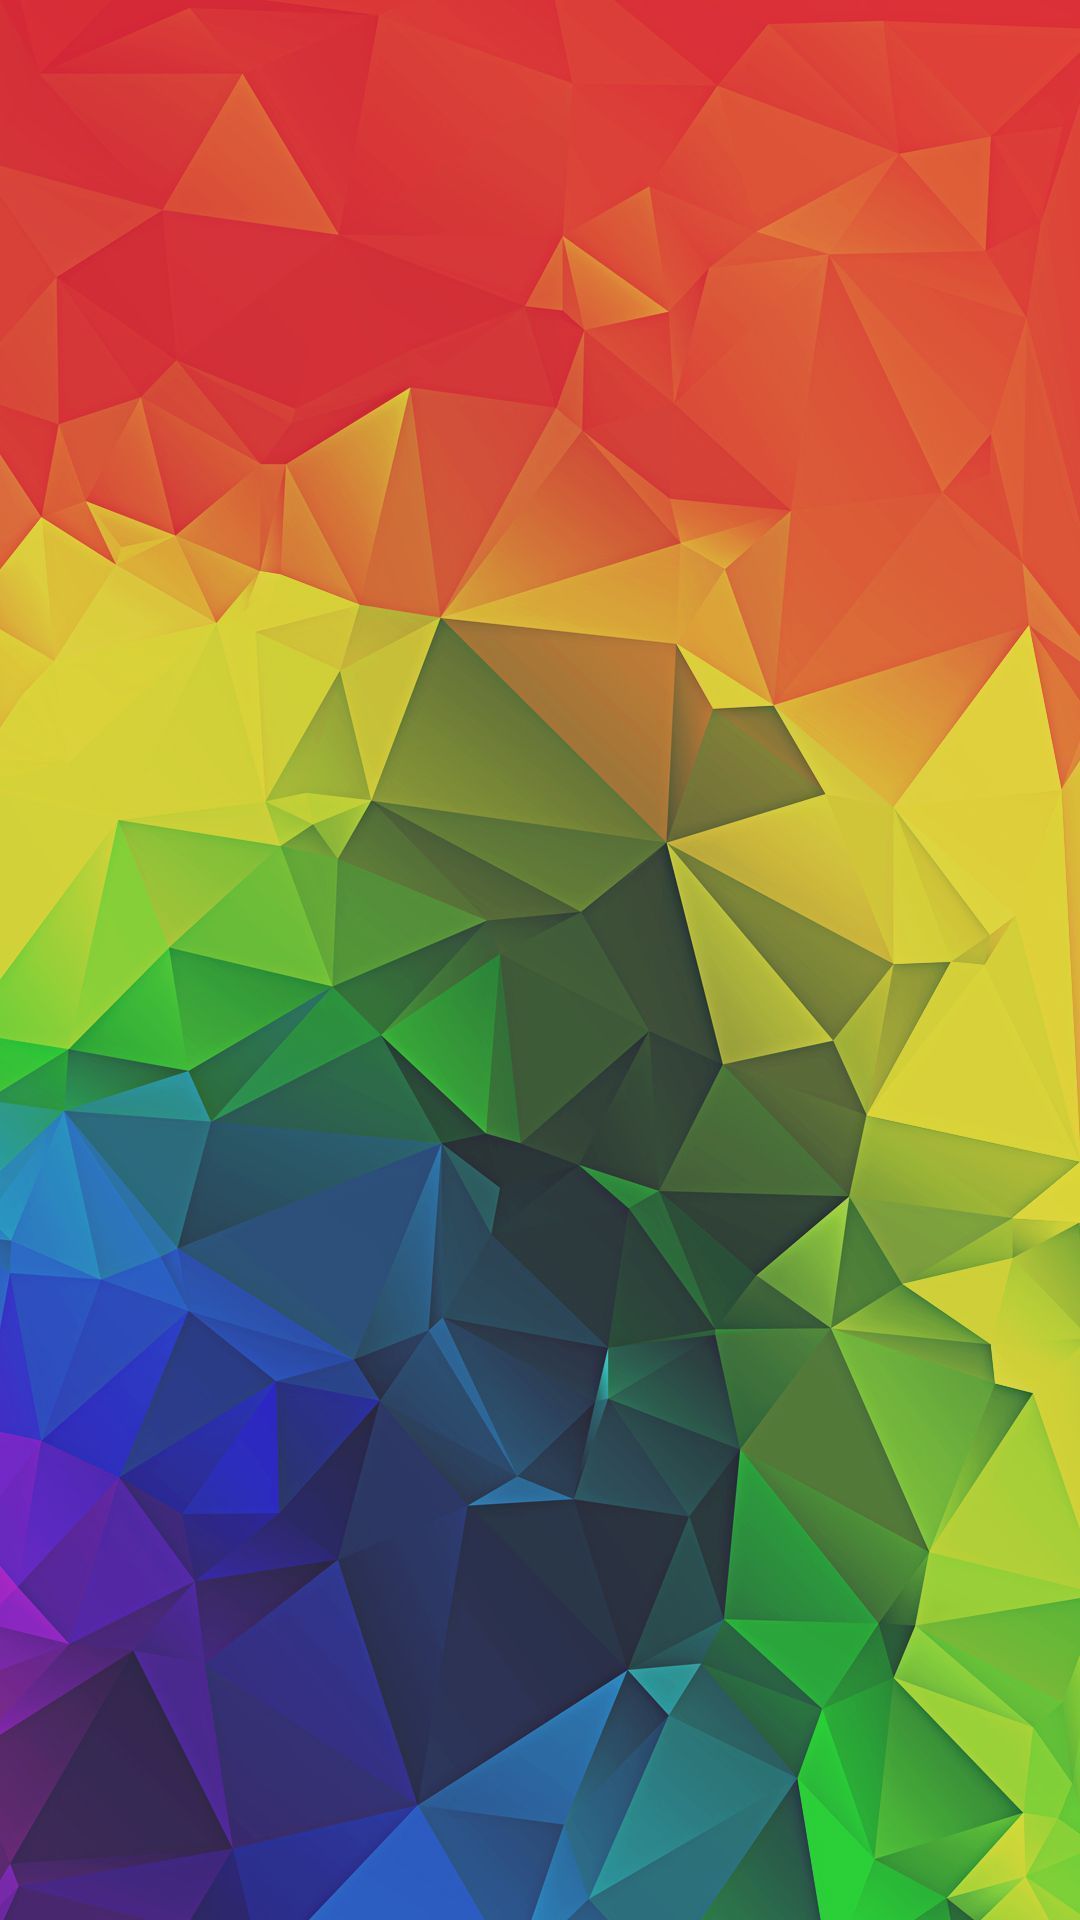 Rainbow Phone. Rainbow wallpaper, Abstract, iPhone 6 wallpaper